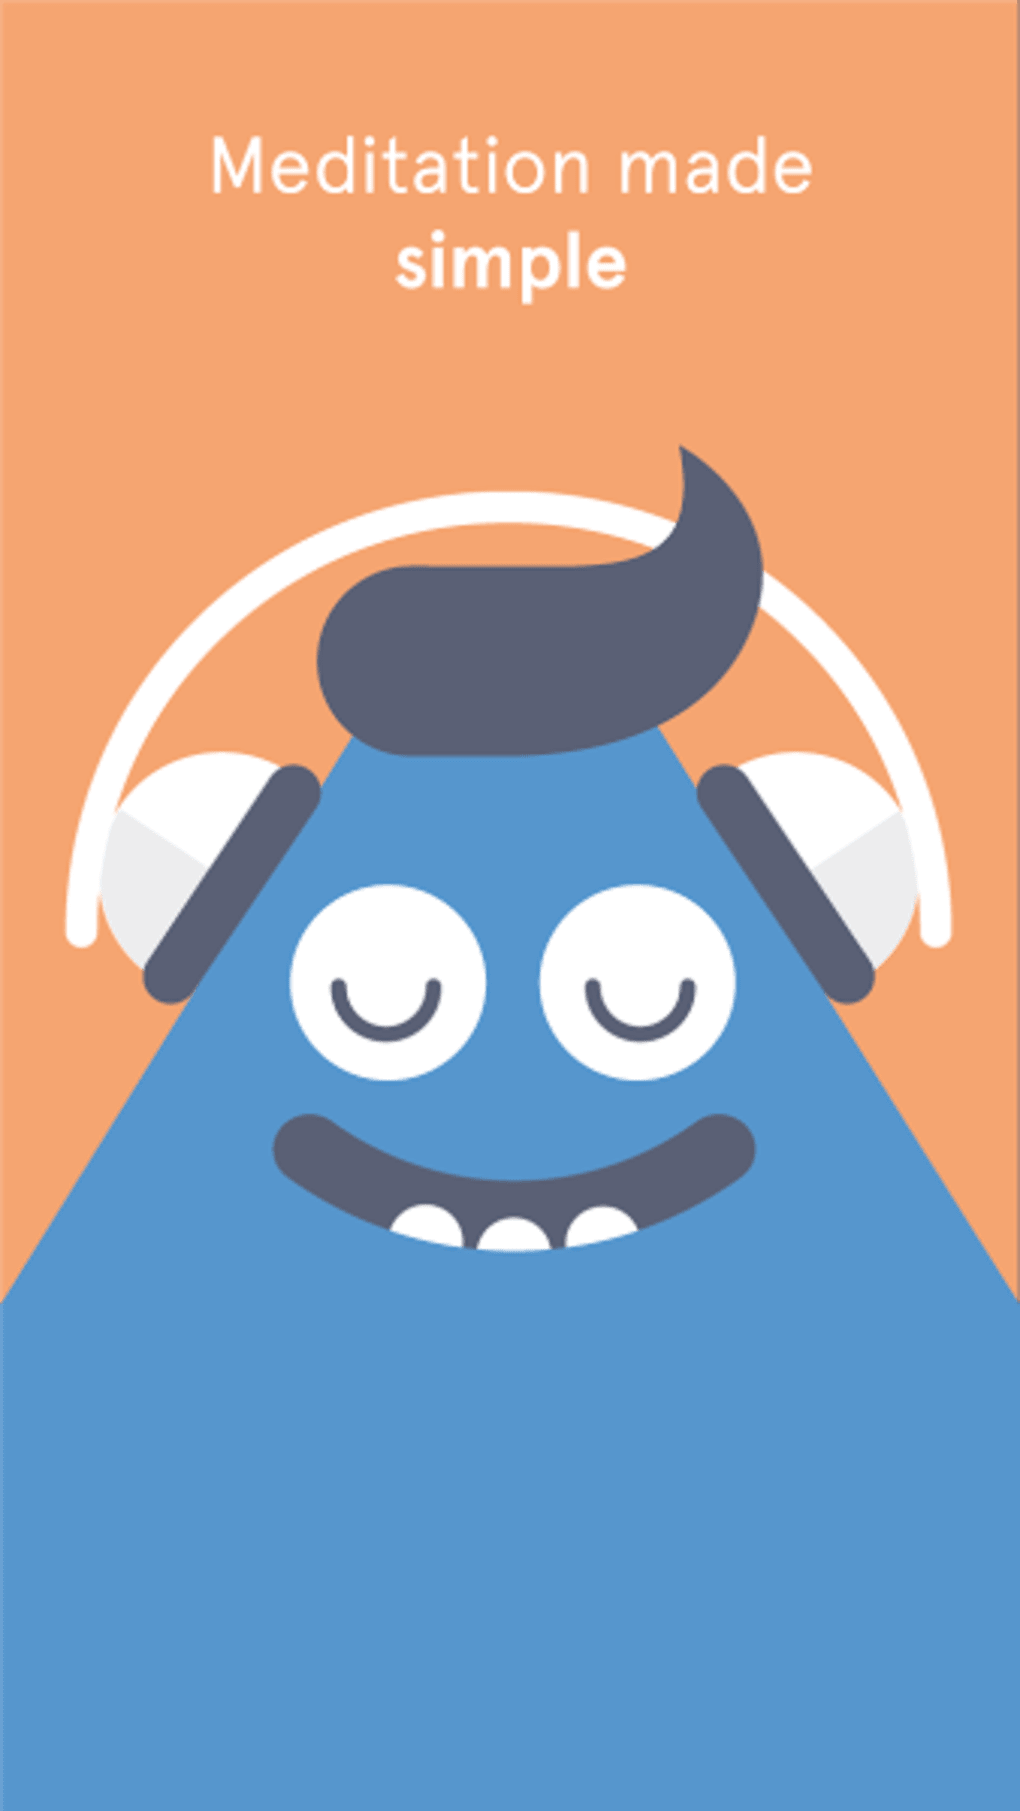 headspace meditation app download